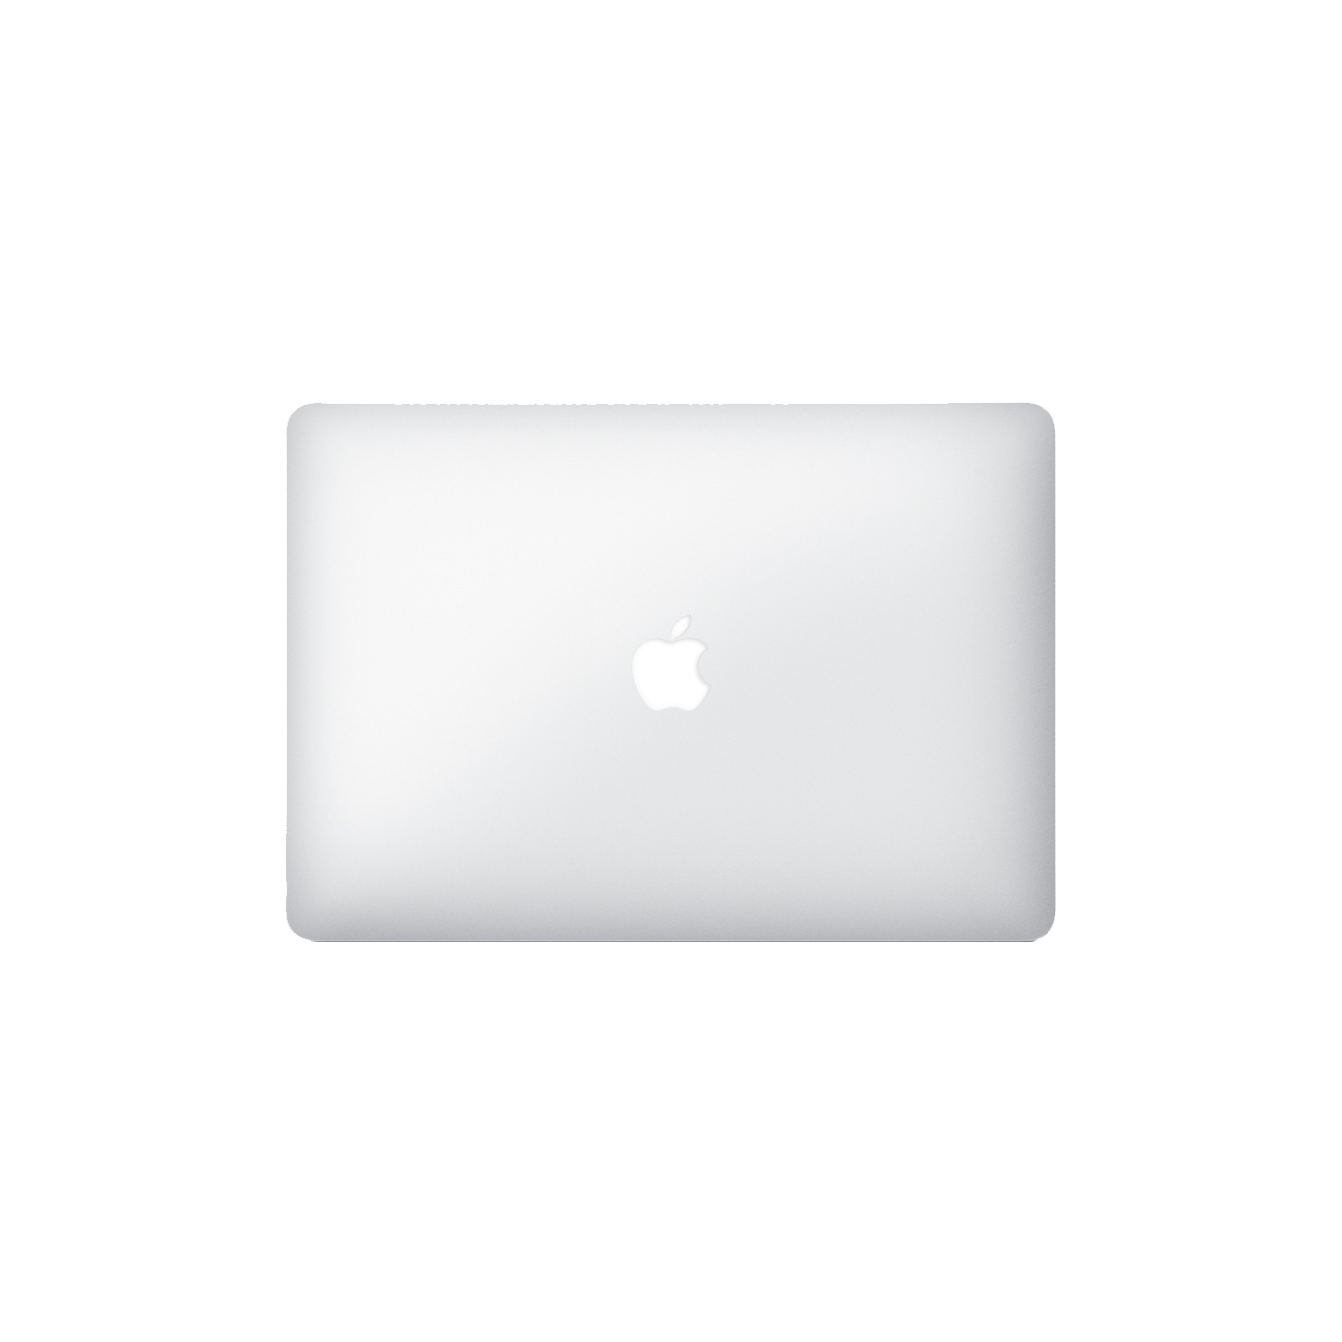 Refurbished MacBook Pro 15" i7 2.8 Ghz 16gb 1tb